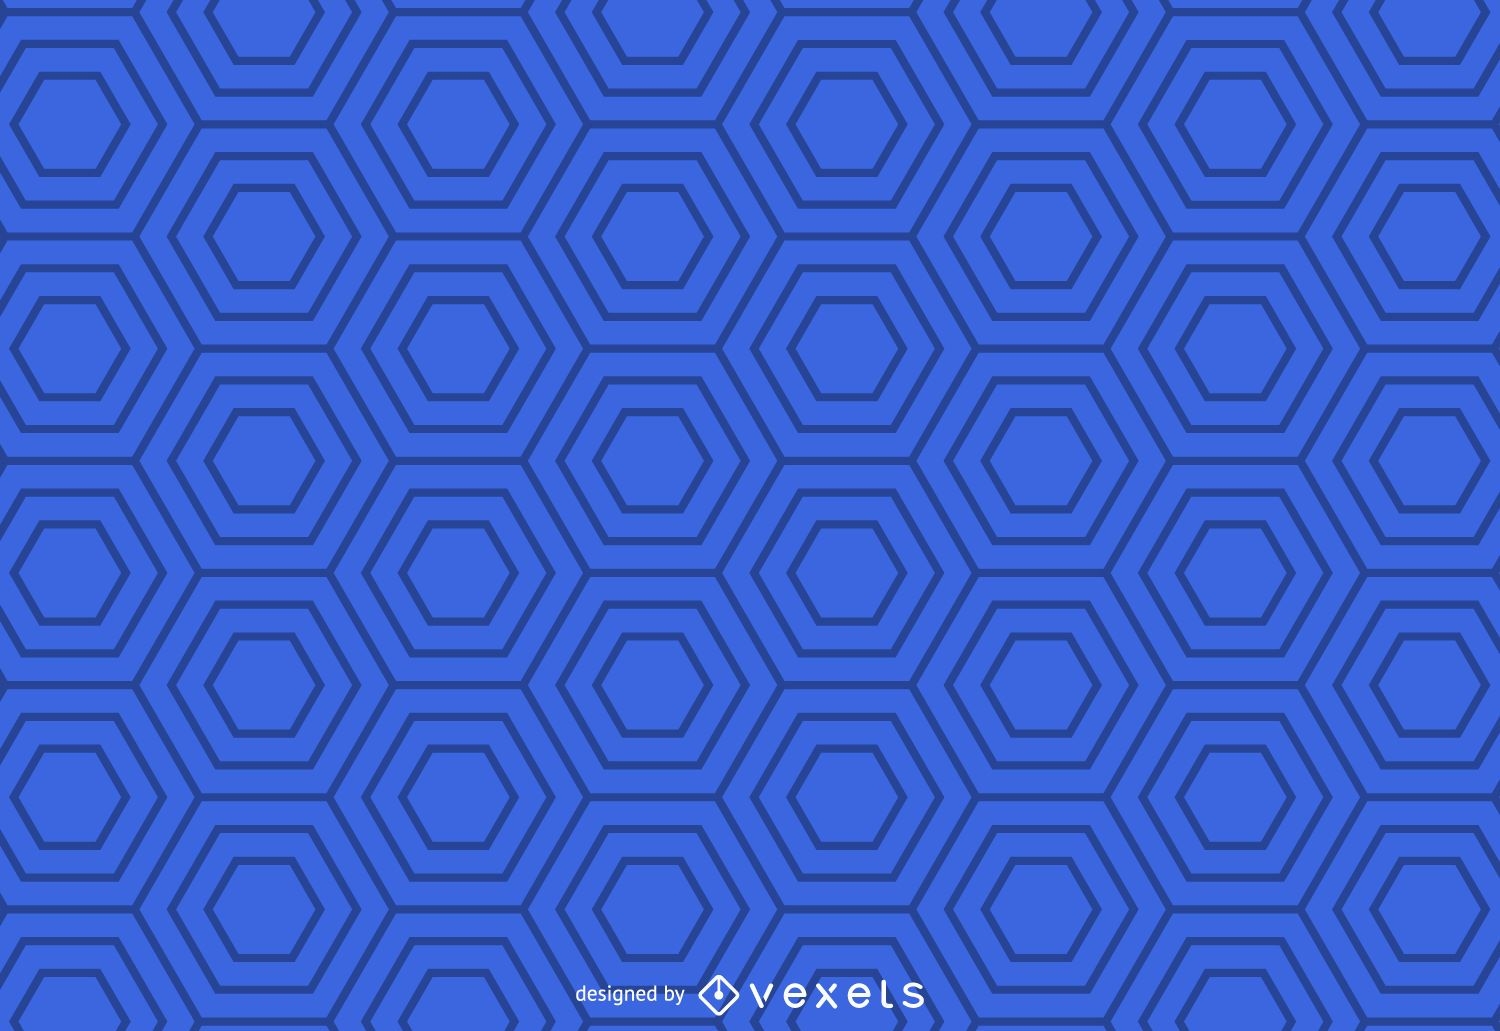 Blue geometric hexagonal pattern